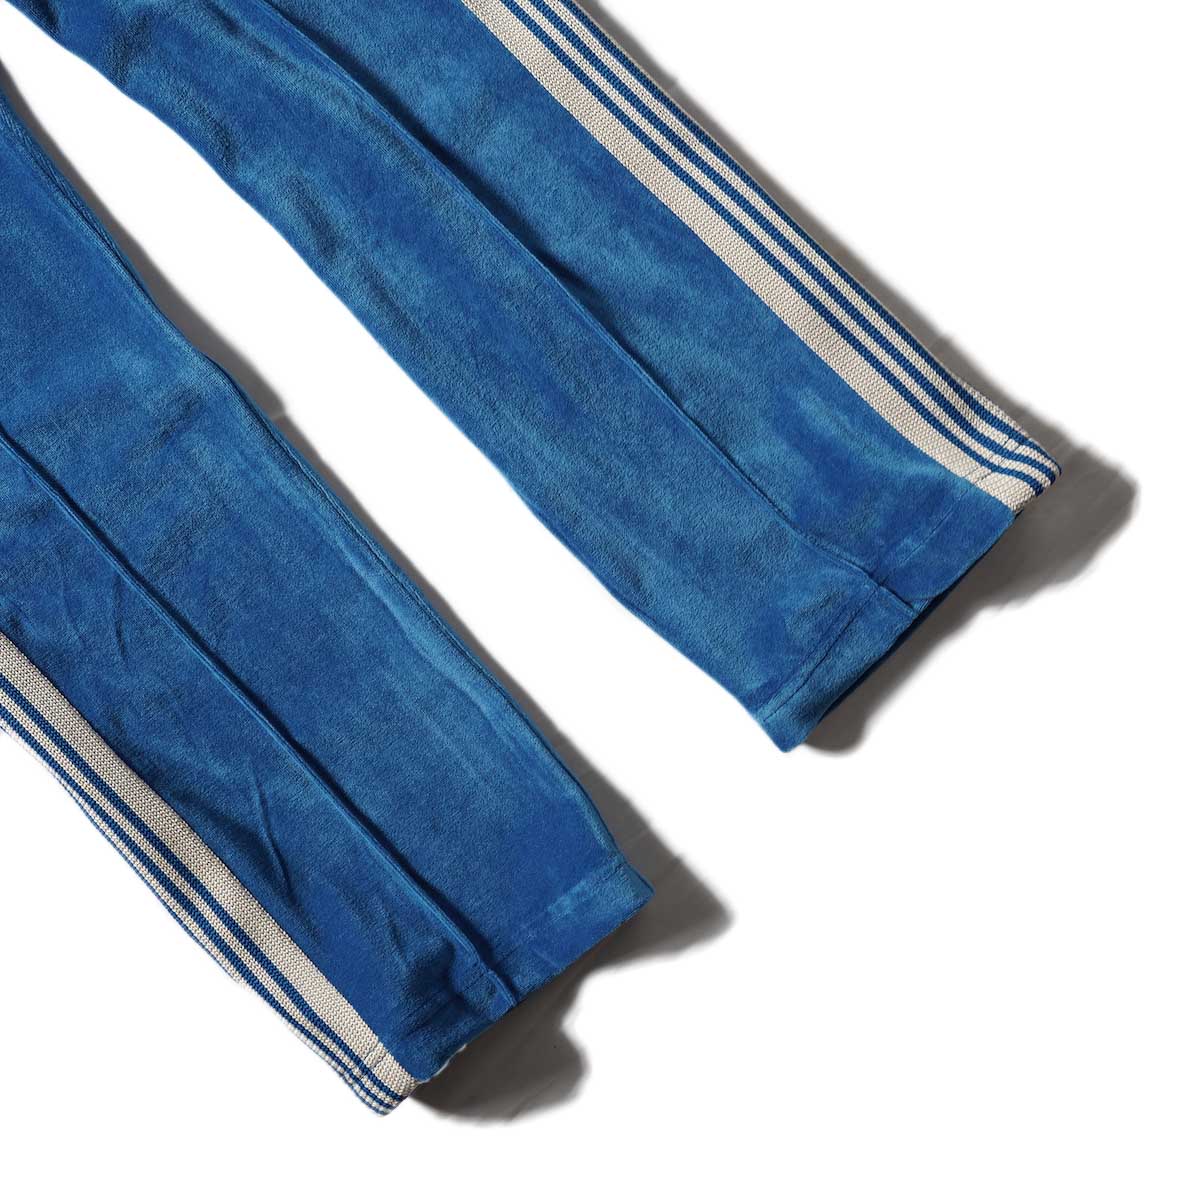 Needles / NARROW TRACK PANT - C/PE VELOUR (Blue)裾